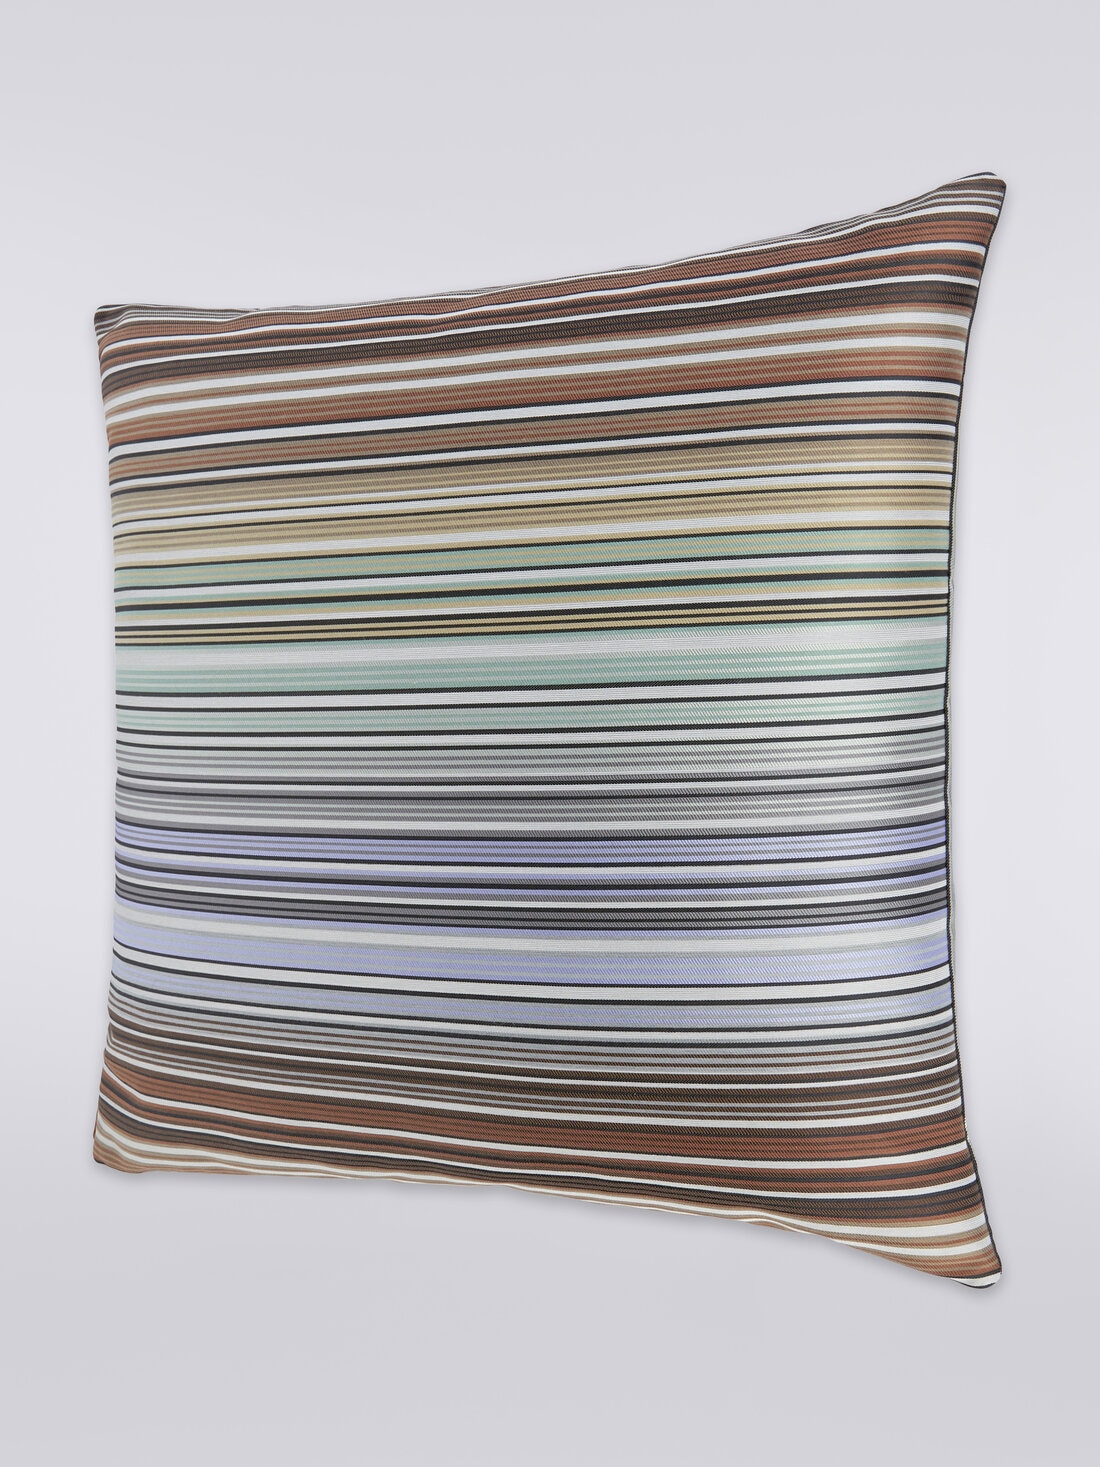 Brighton cushion 60x60 cm, Multicoloured  - 8051275607472 - 1